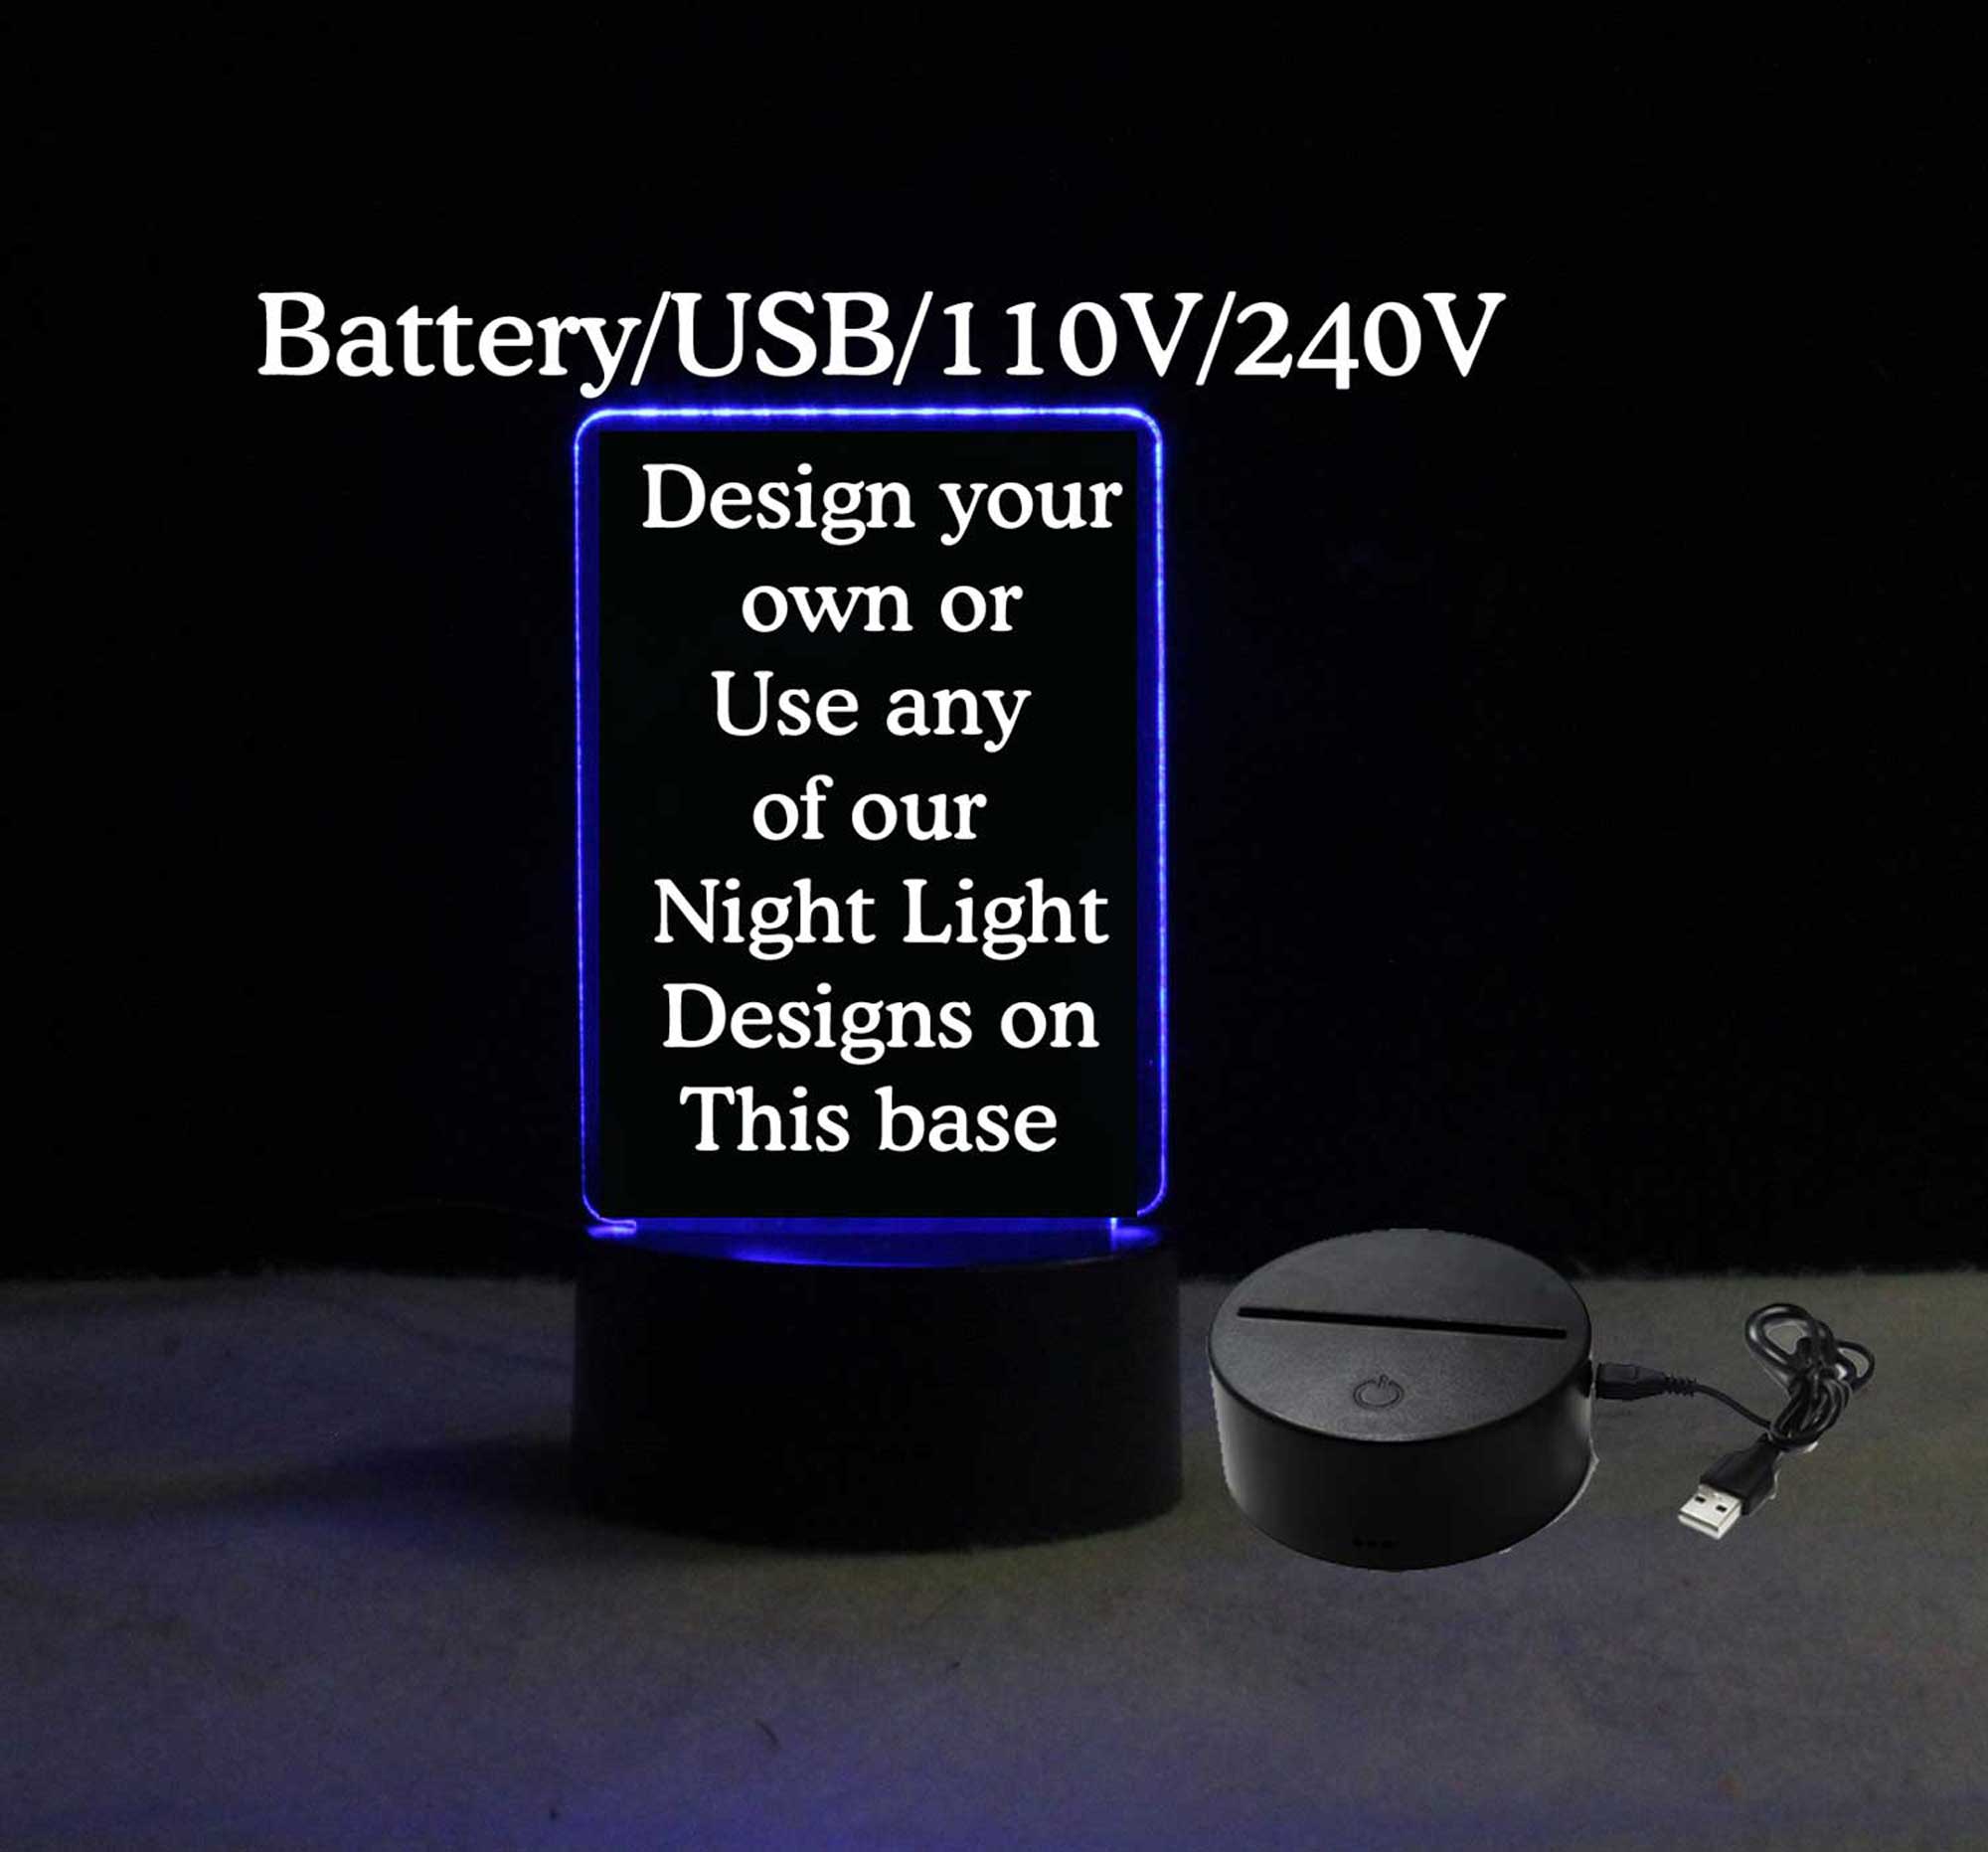 Personalized USB/110V/240V battery operated night light